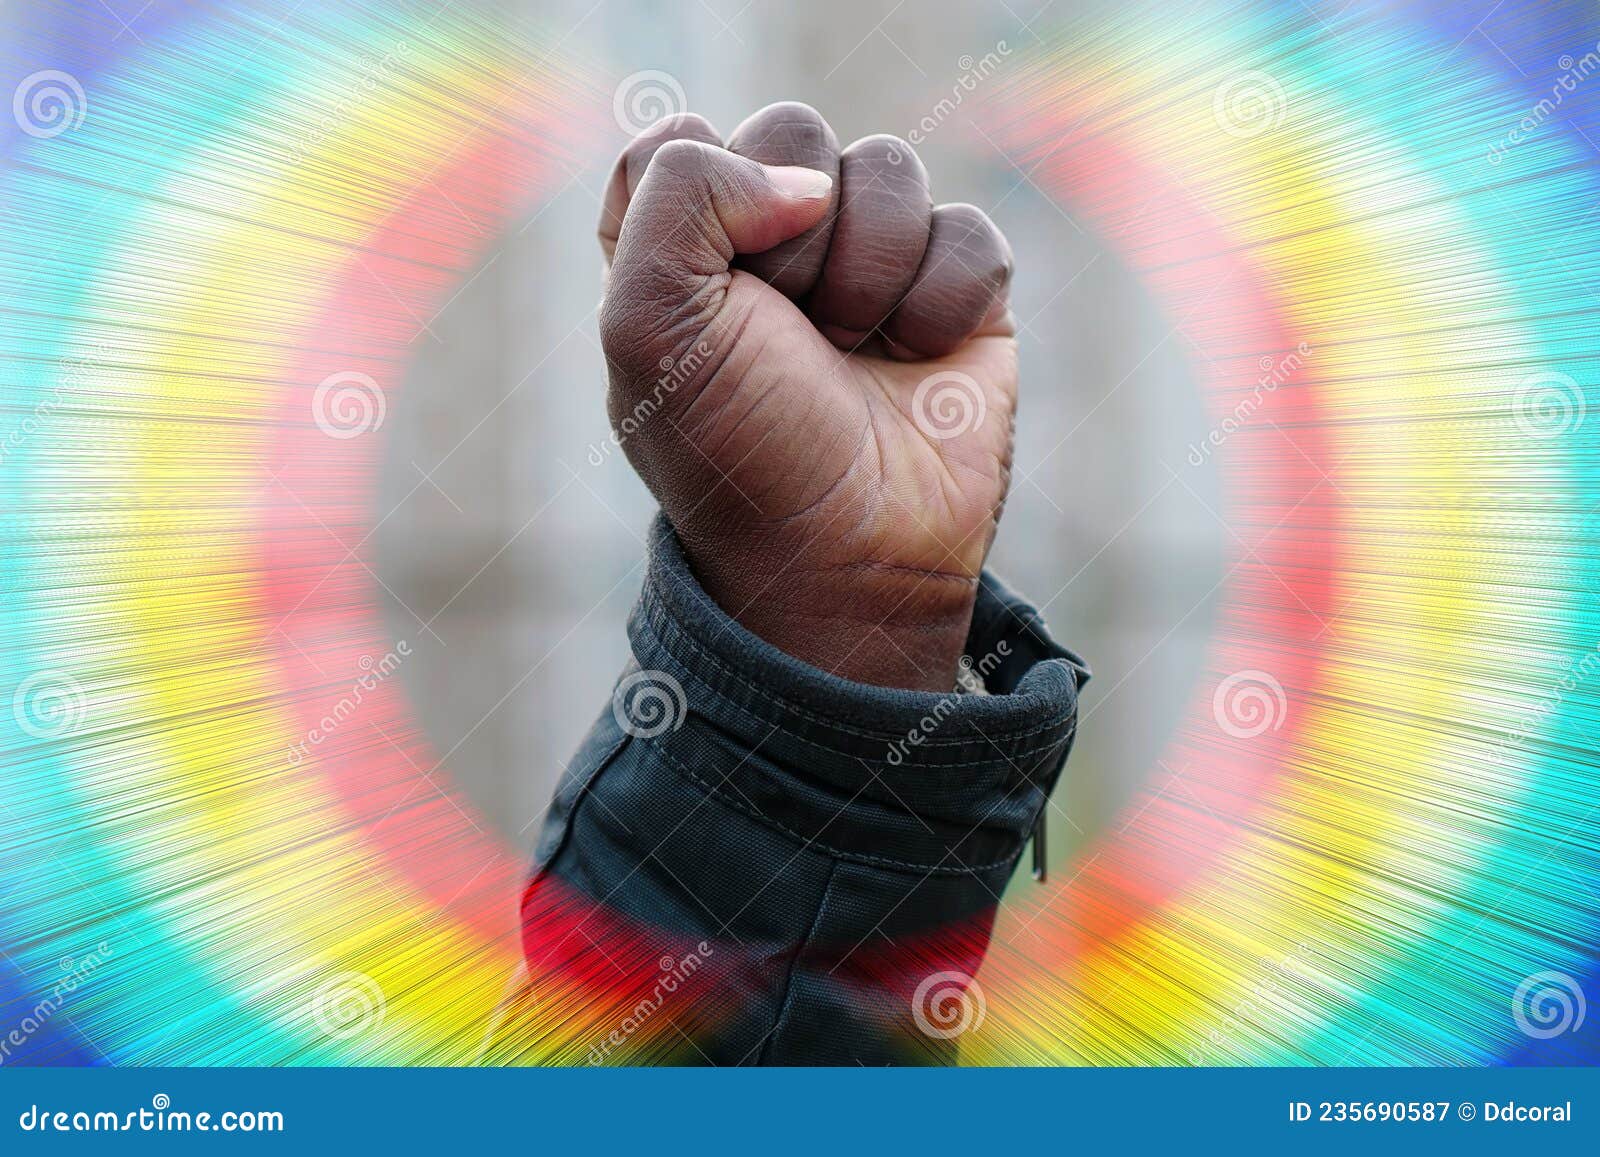 raised black man fist in protest